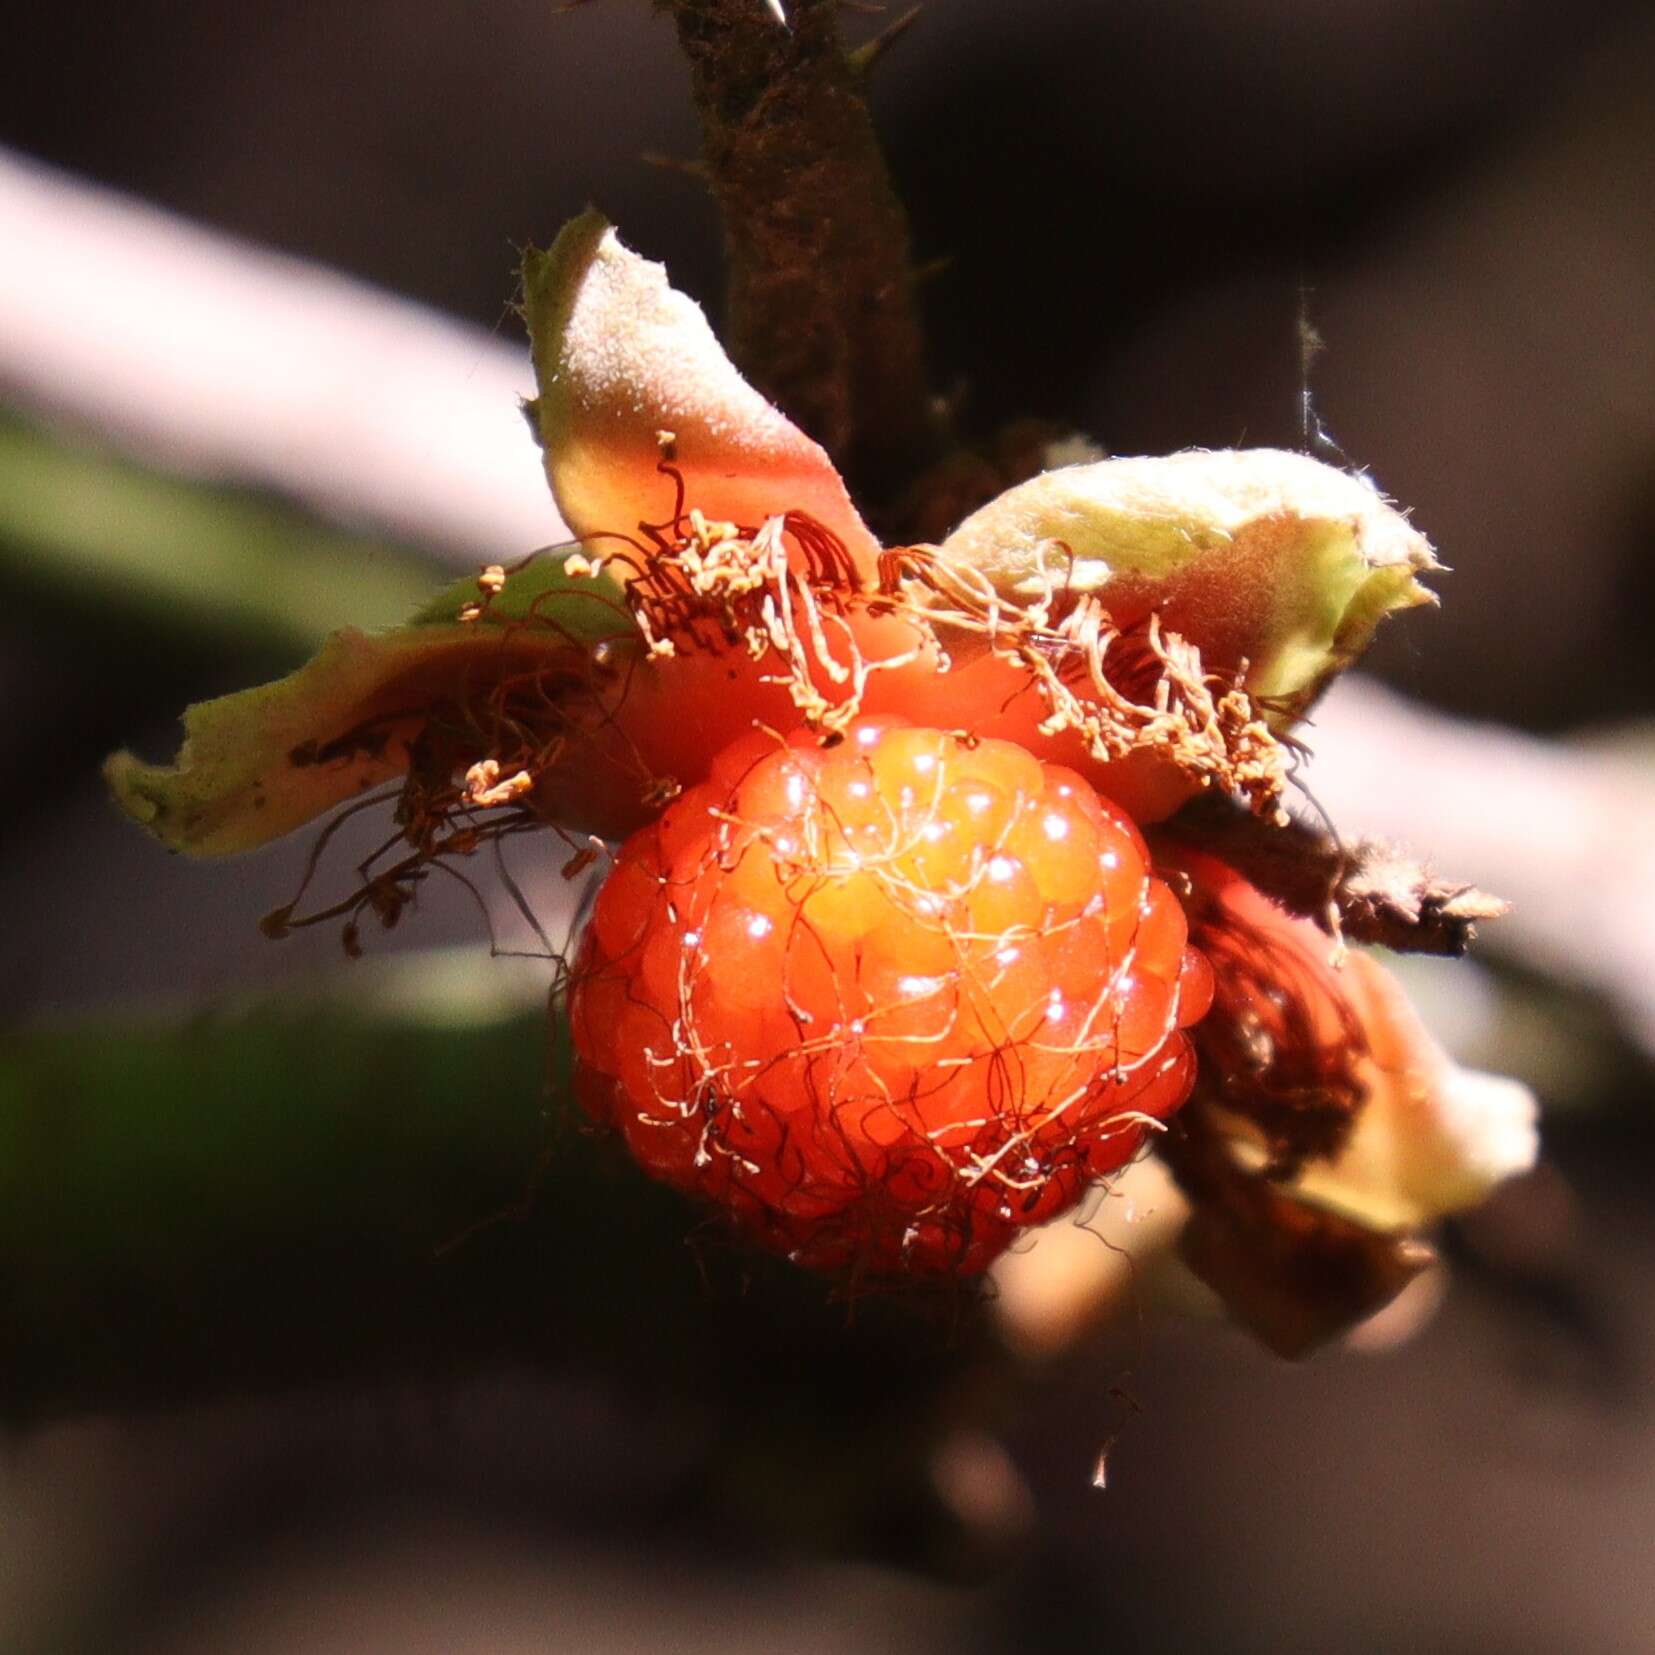 Image of palmleaf dewberry